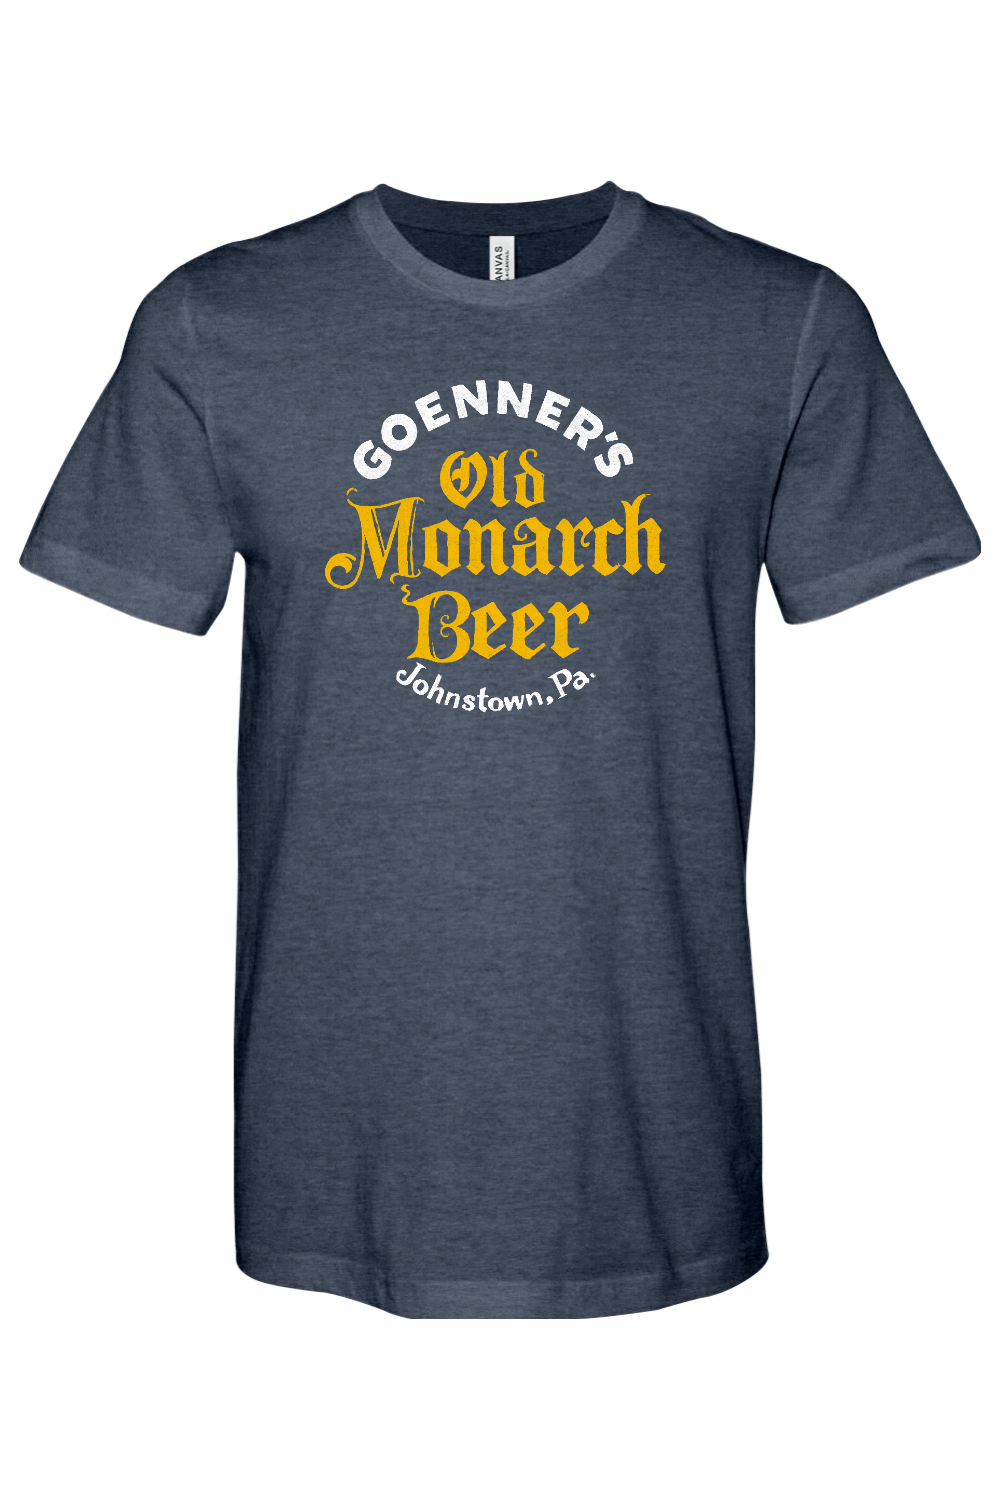 Goenner's Old Monarch Beer - Johnstown, PA - Yinzylvania